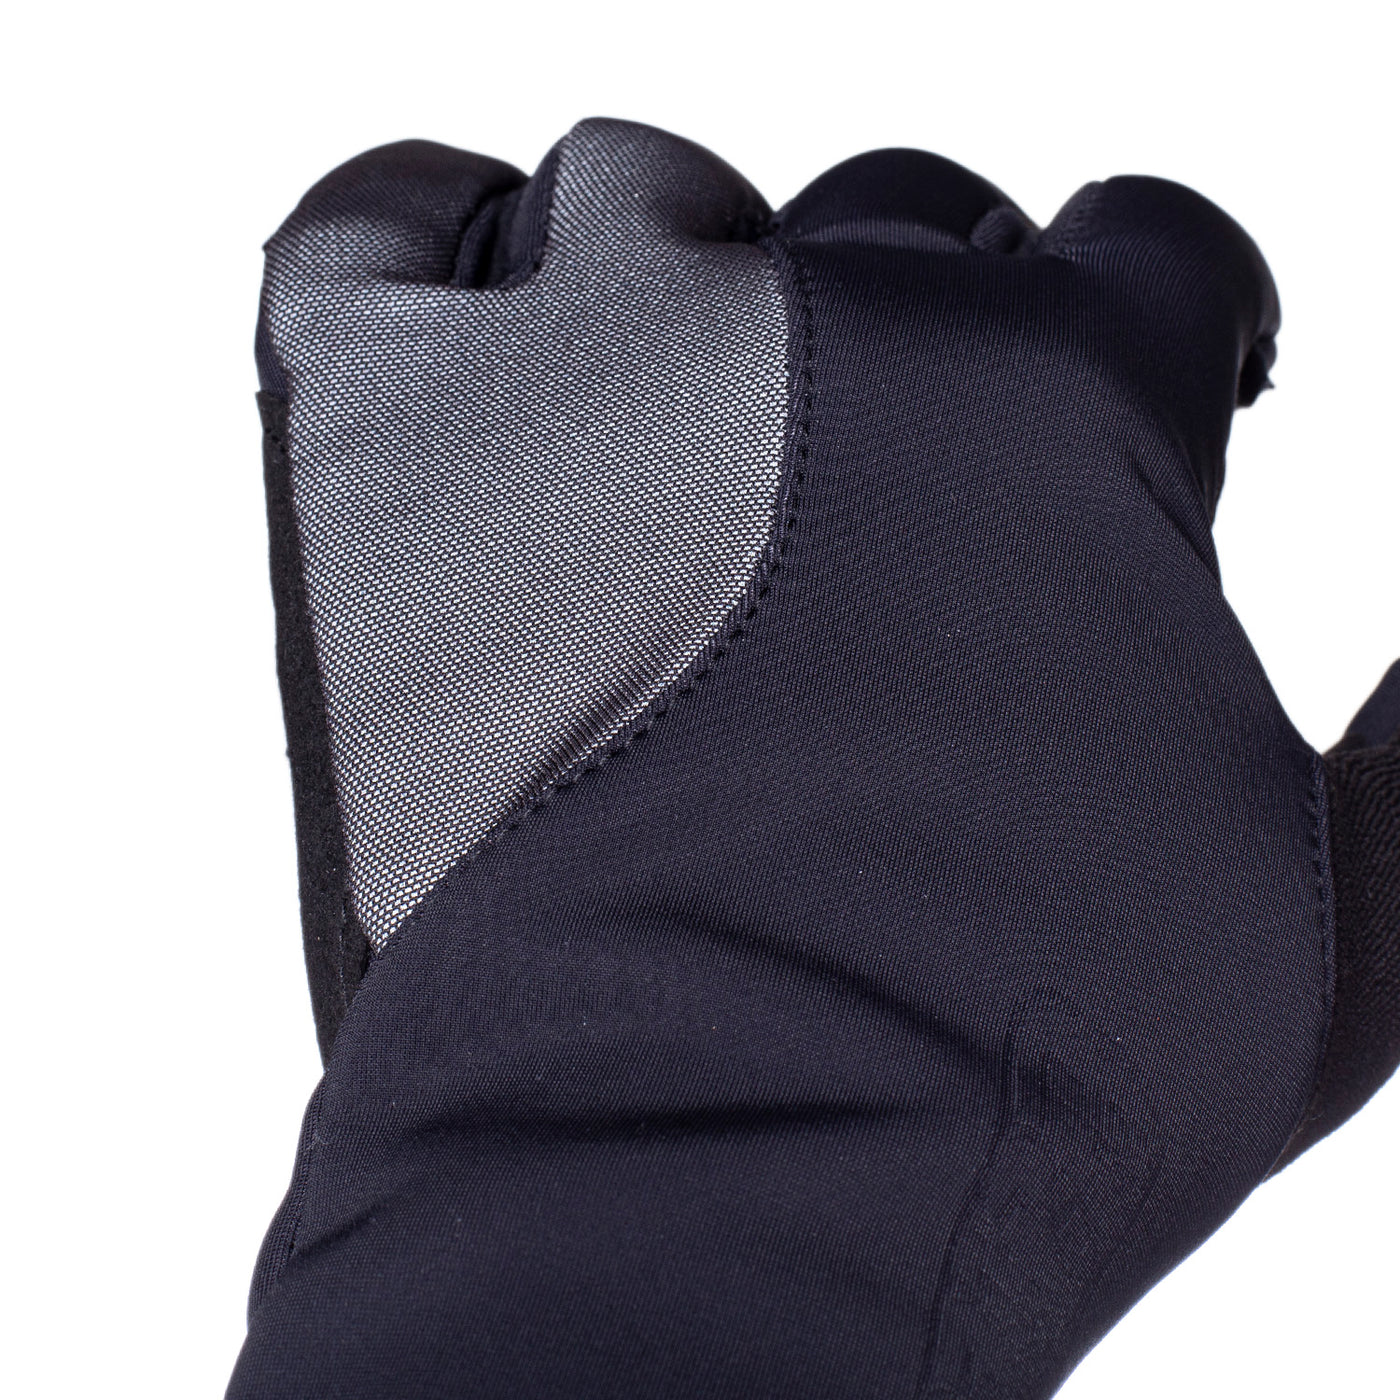 Bioracer Glove One Tempest Protect Pixel hanskat